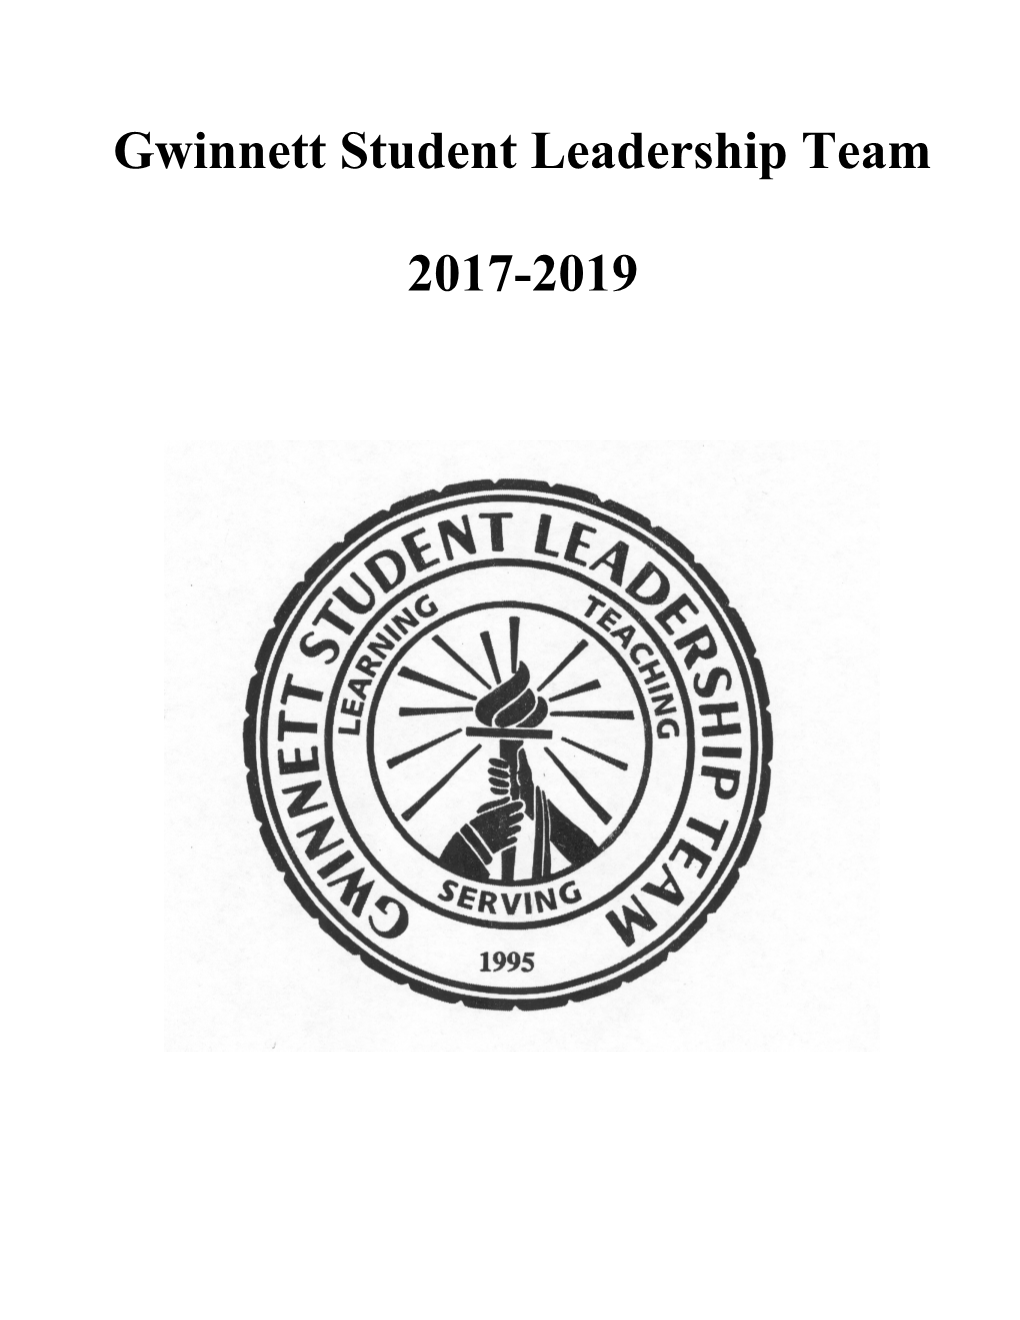 2005-2006 Gwinnett Student Leadership Team Application